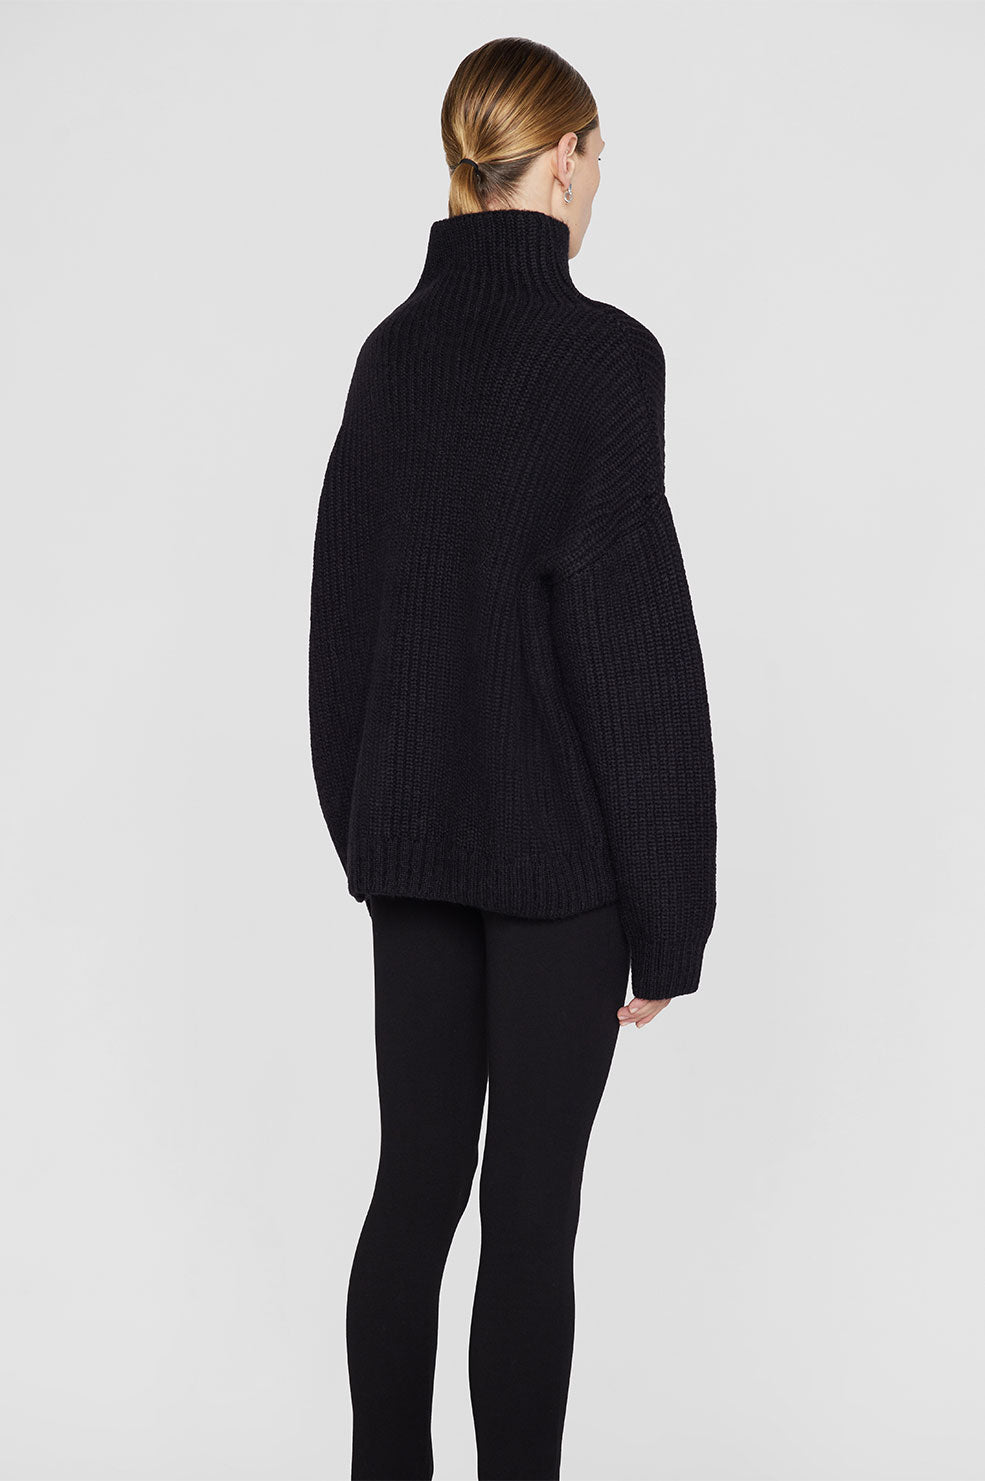 ANINE BING Sydney Sweater - Black - On Model Back